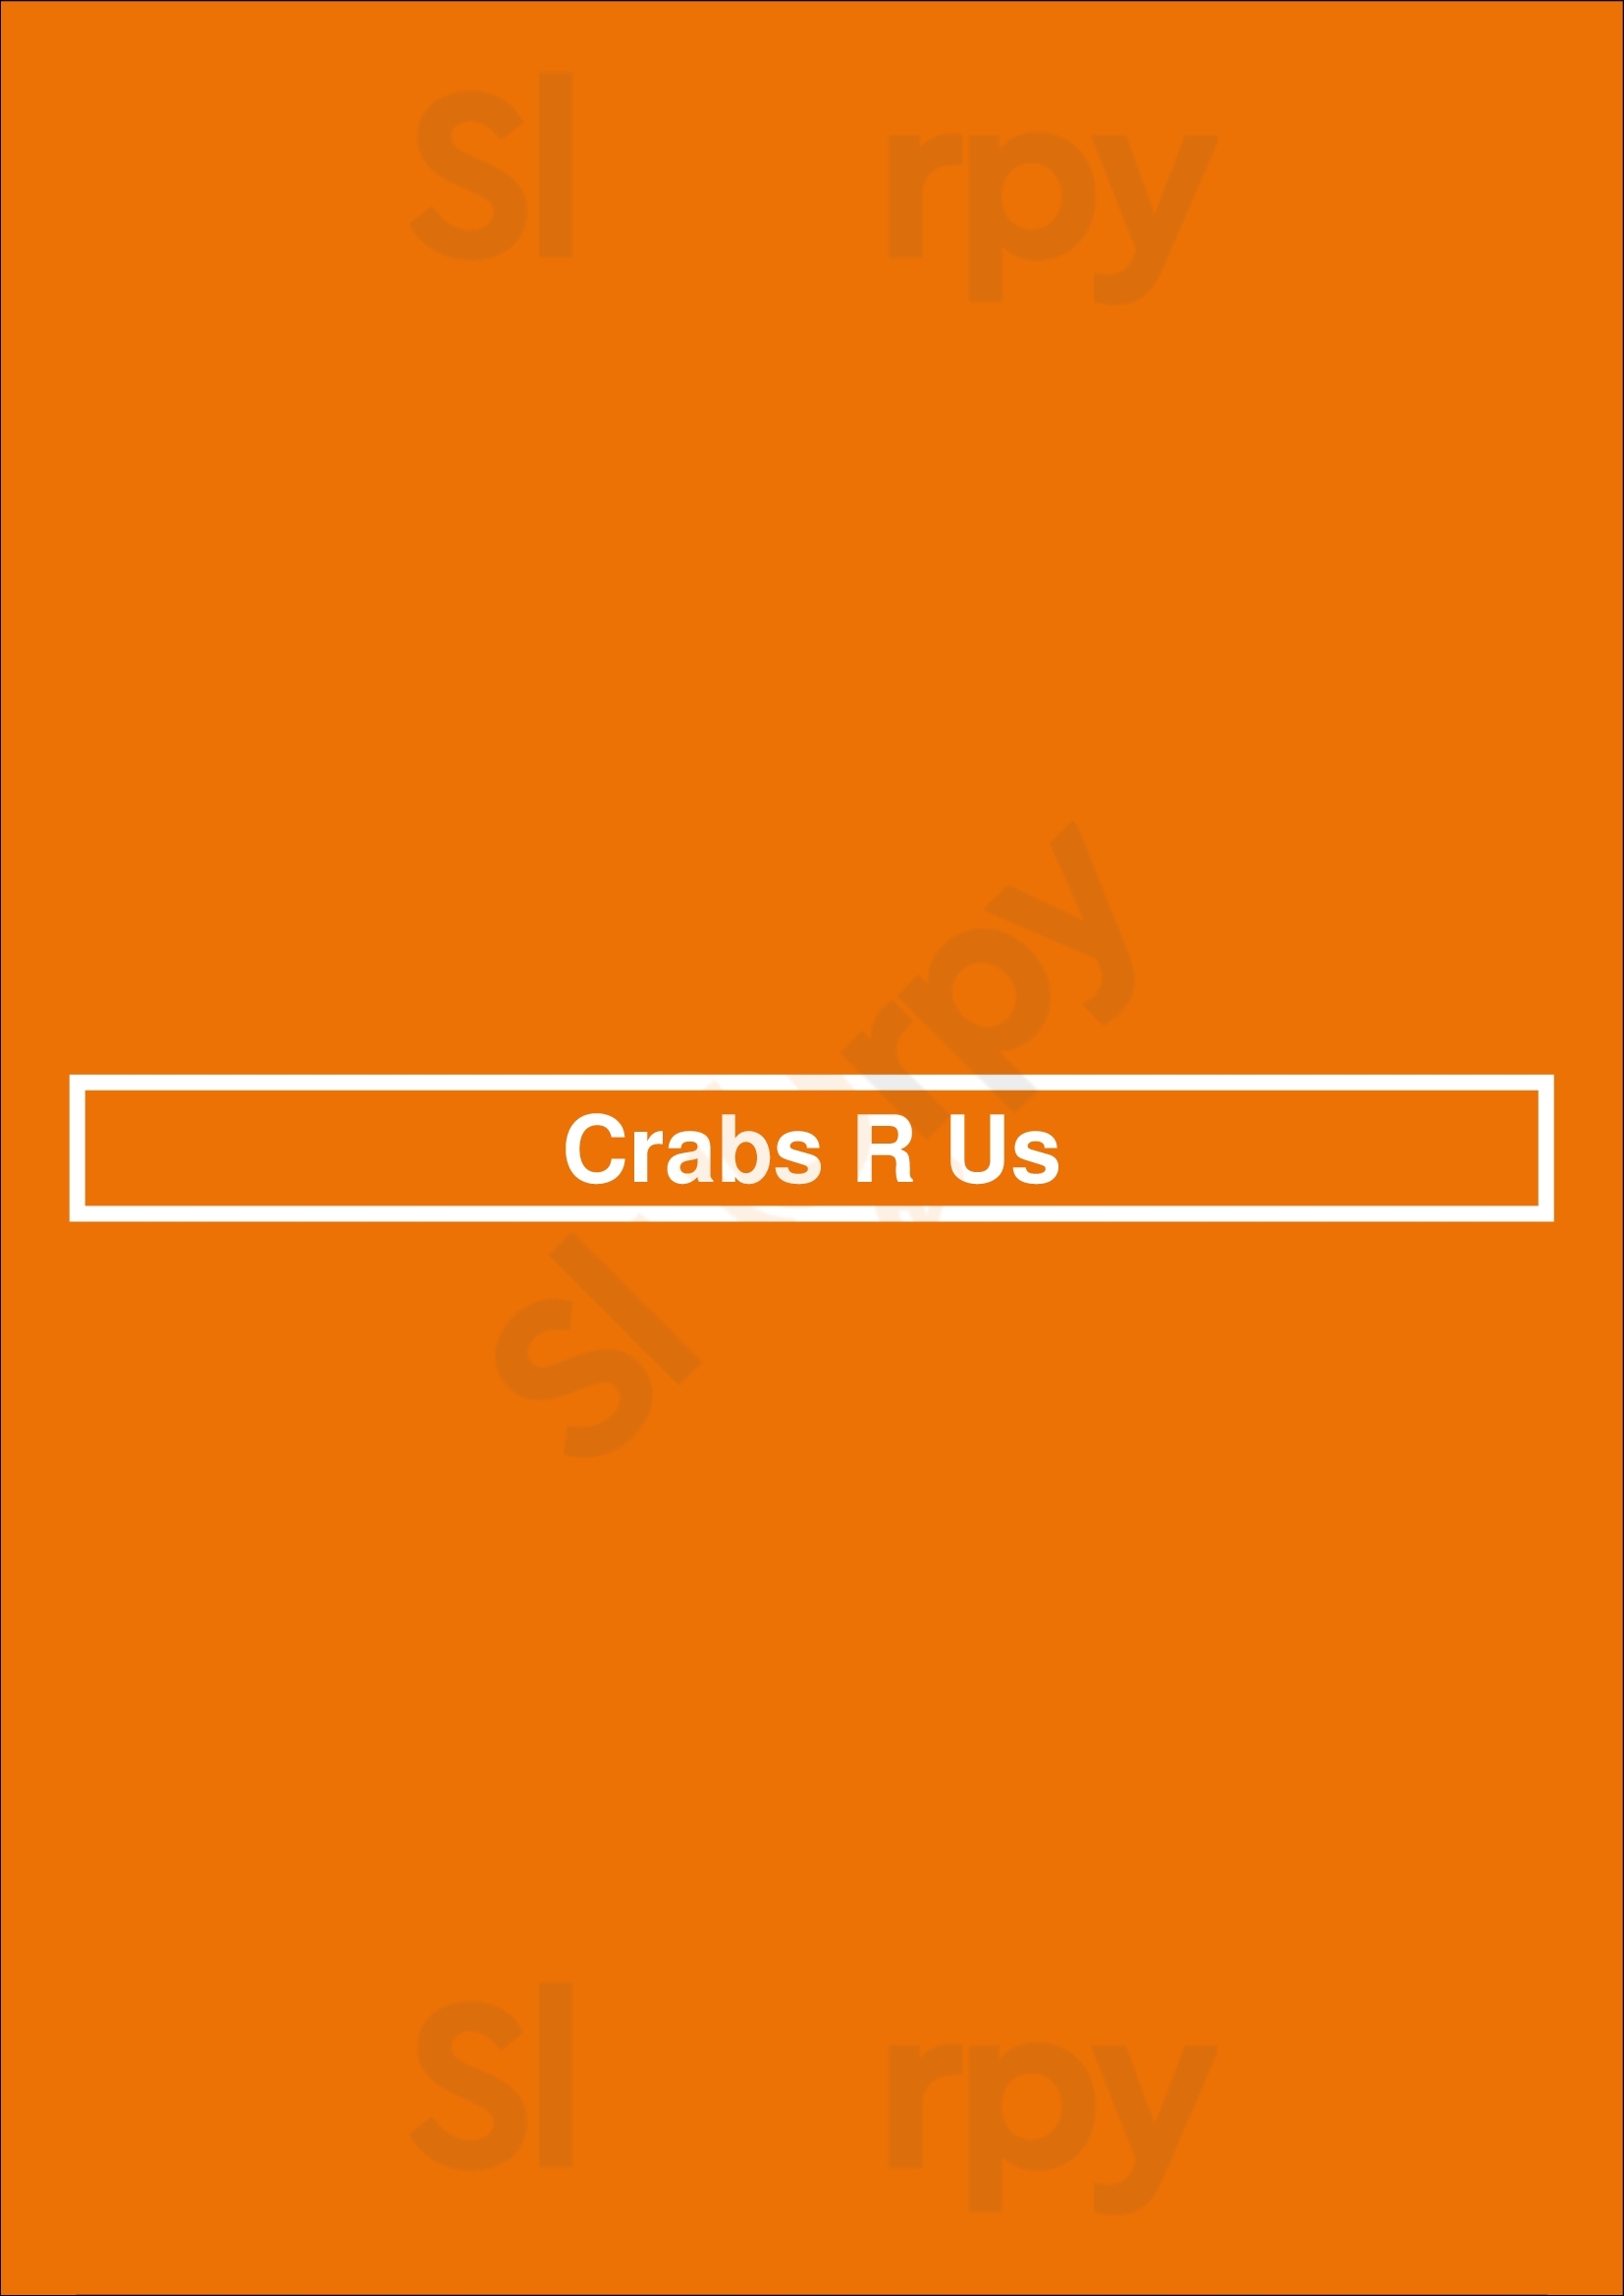 Crabs R Us Pittsburgh Menu - 1